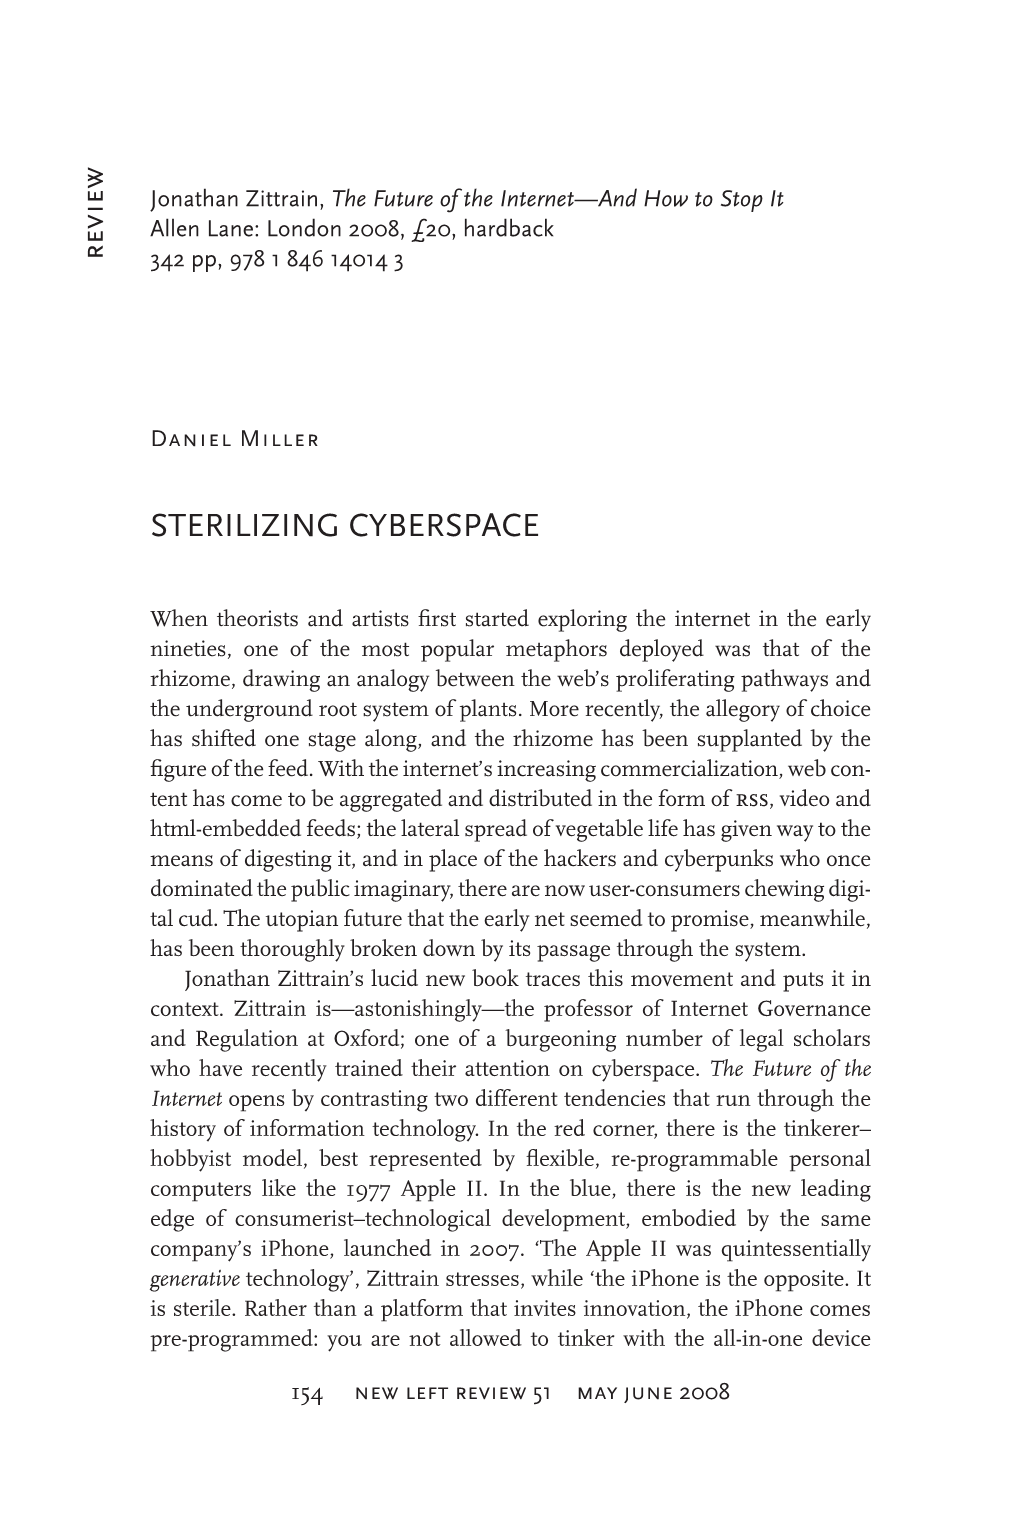 Sterilizing Cyberspace